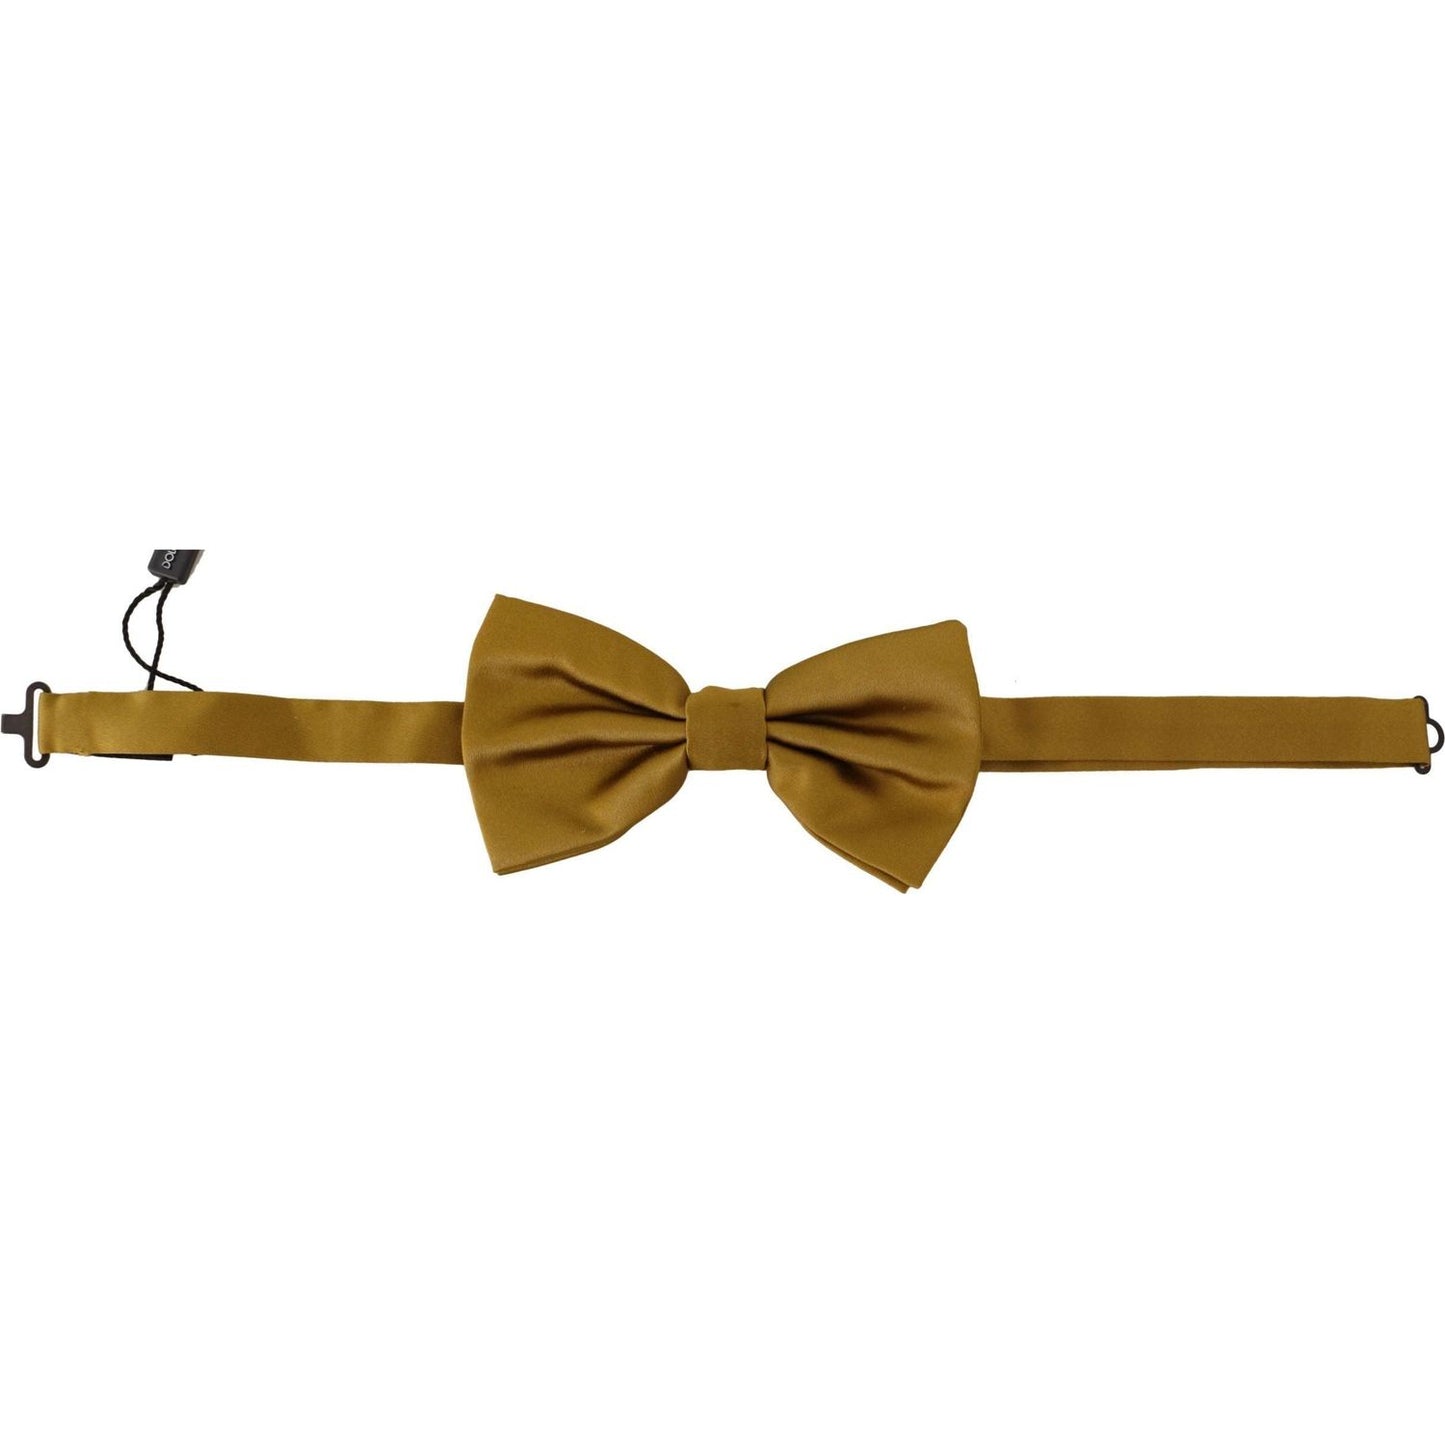 Dolce & Gabbana Elegant Mustard Silk Bow Tie yellow-mustard-100-silk-butterfly-papillon-bow-tie IMG_7778-scaled-3c51aa4b-2a0_6ec61843-d1c3-447f-8460-11ac1bcf1c0b.jpg